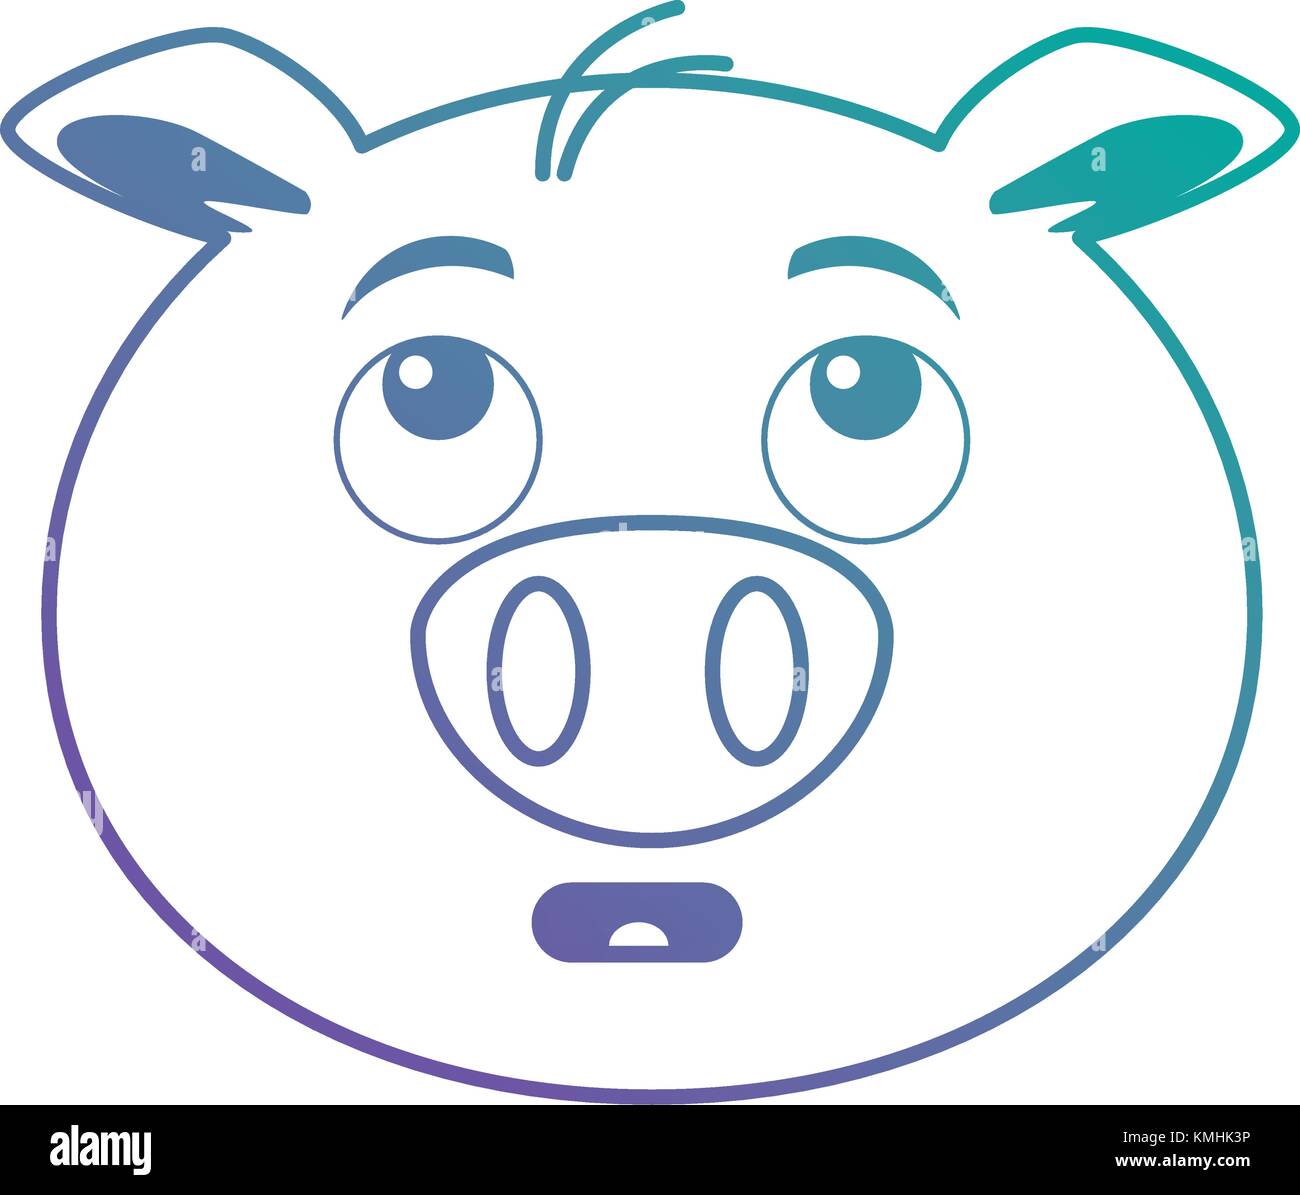 Terrified Schwein emoji Kawaii Stock Vektor